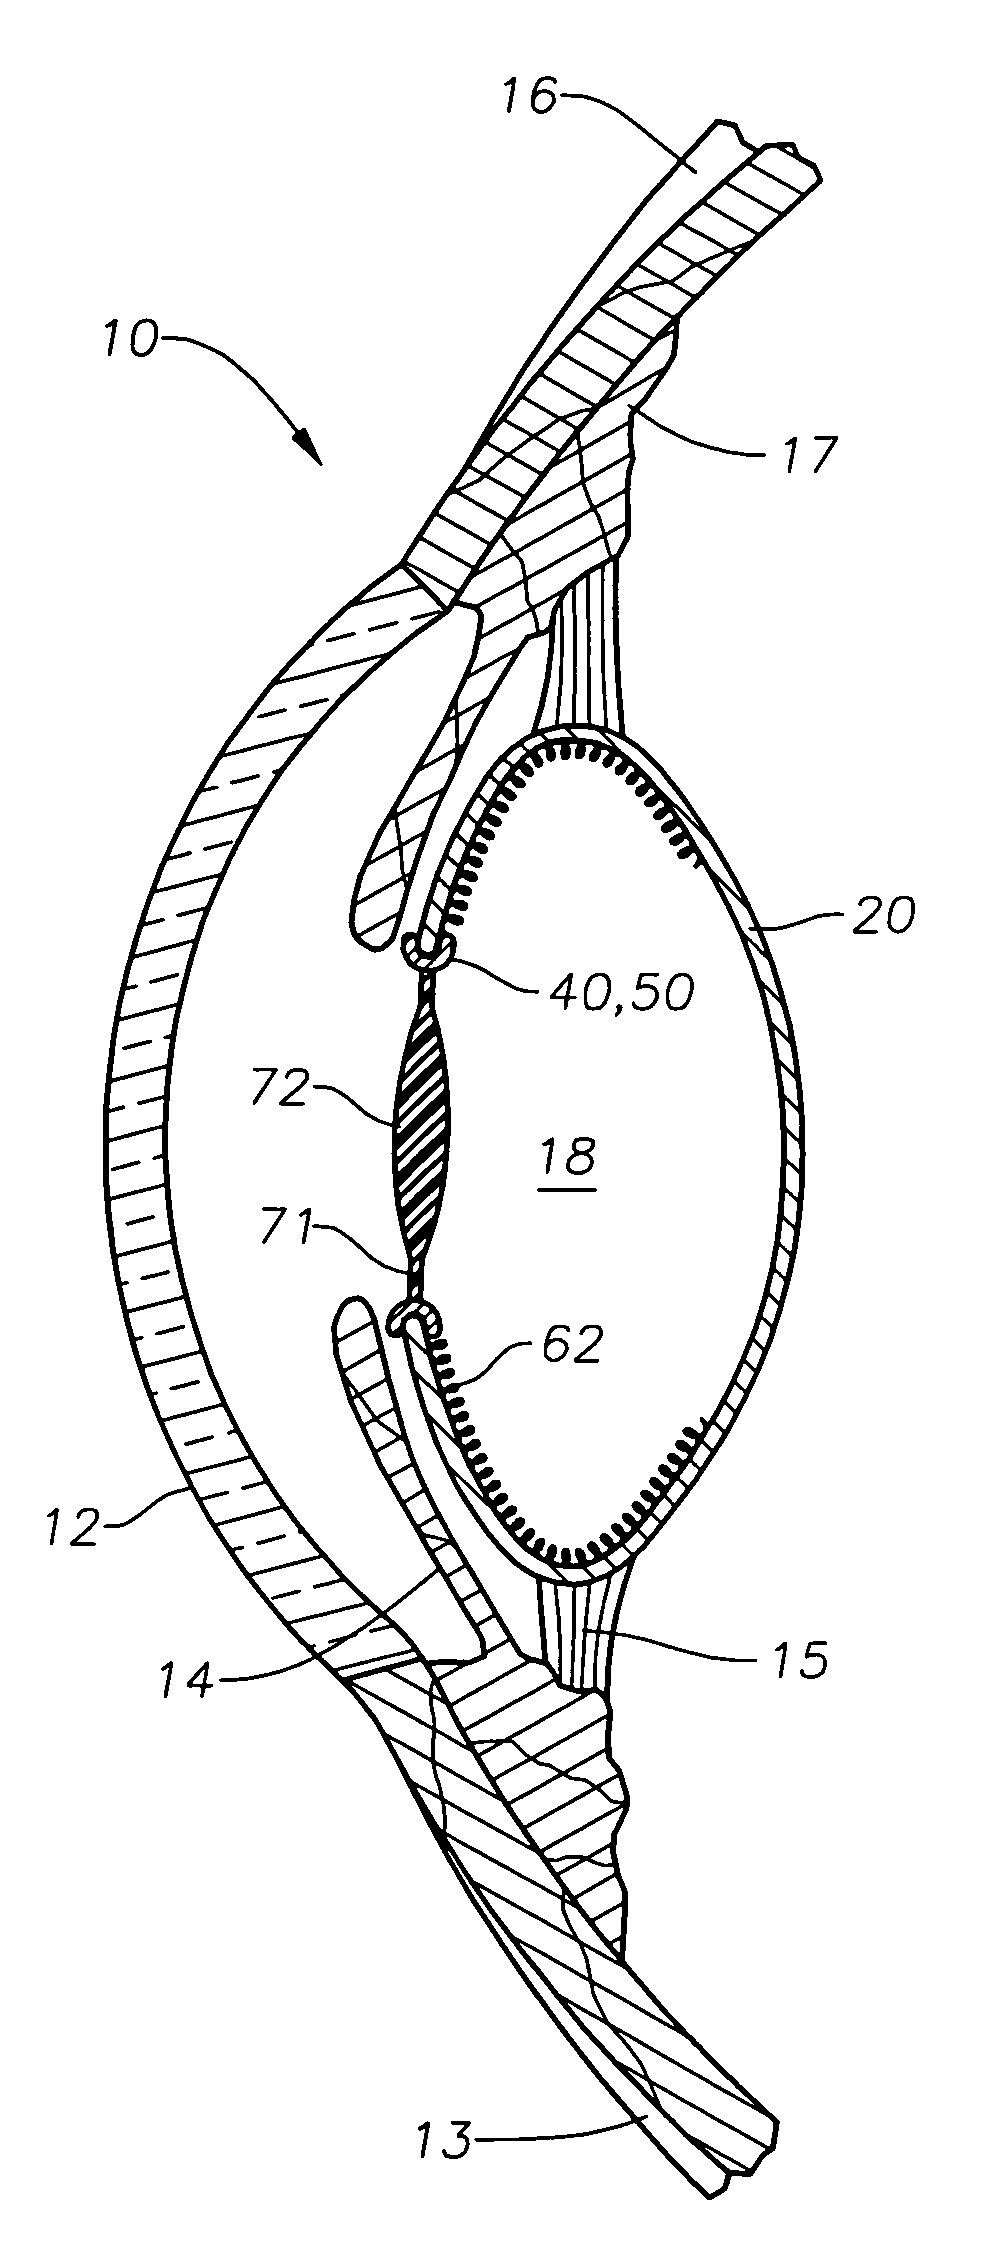 Intracapsular pseudophakic device